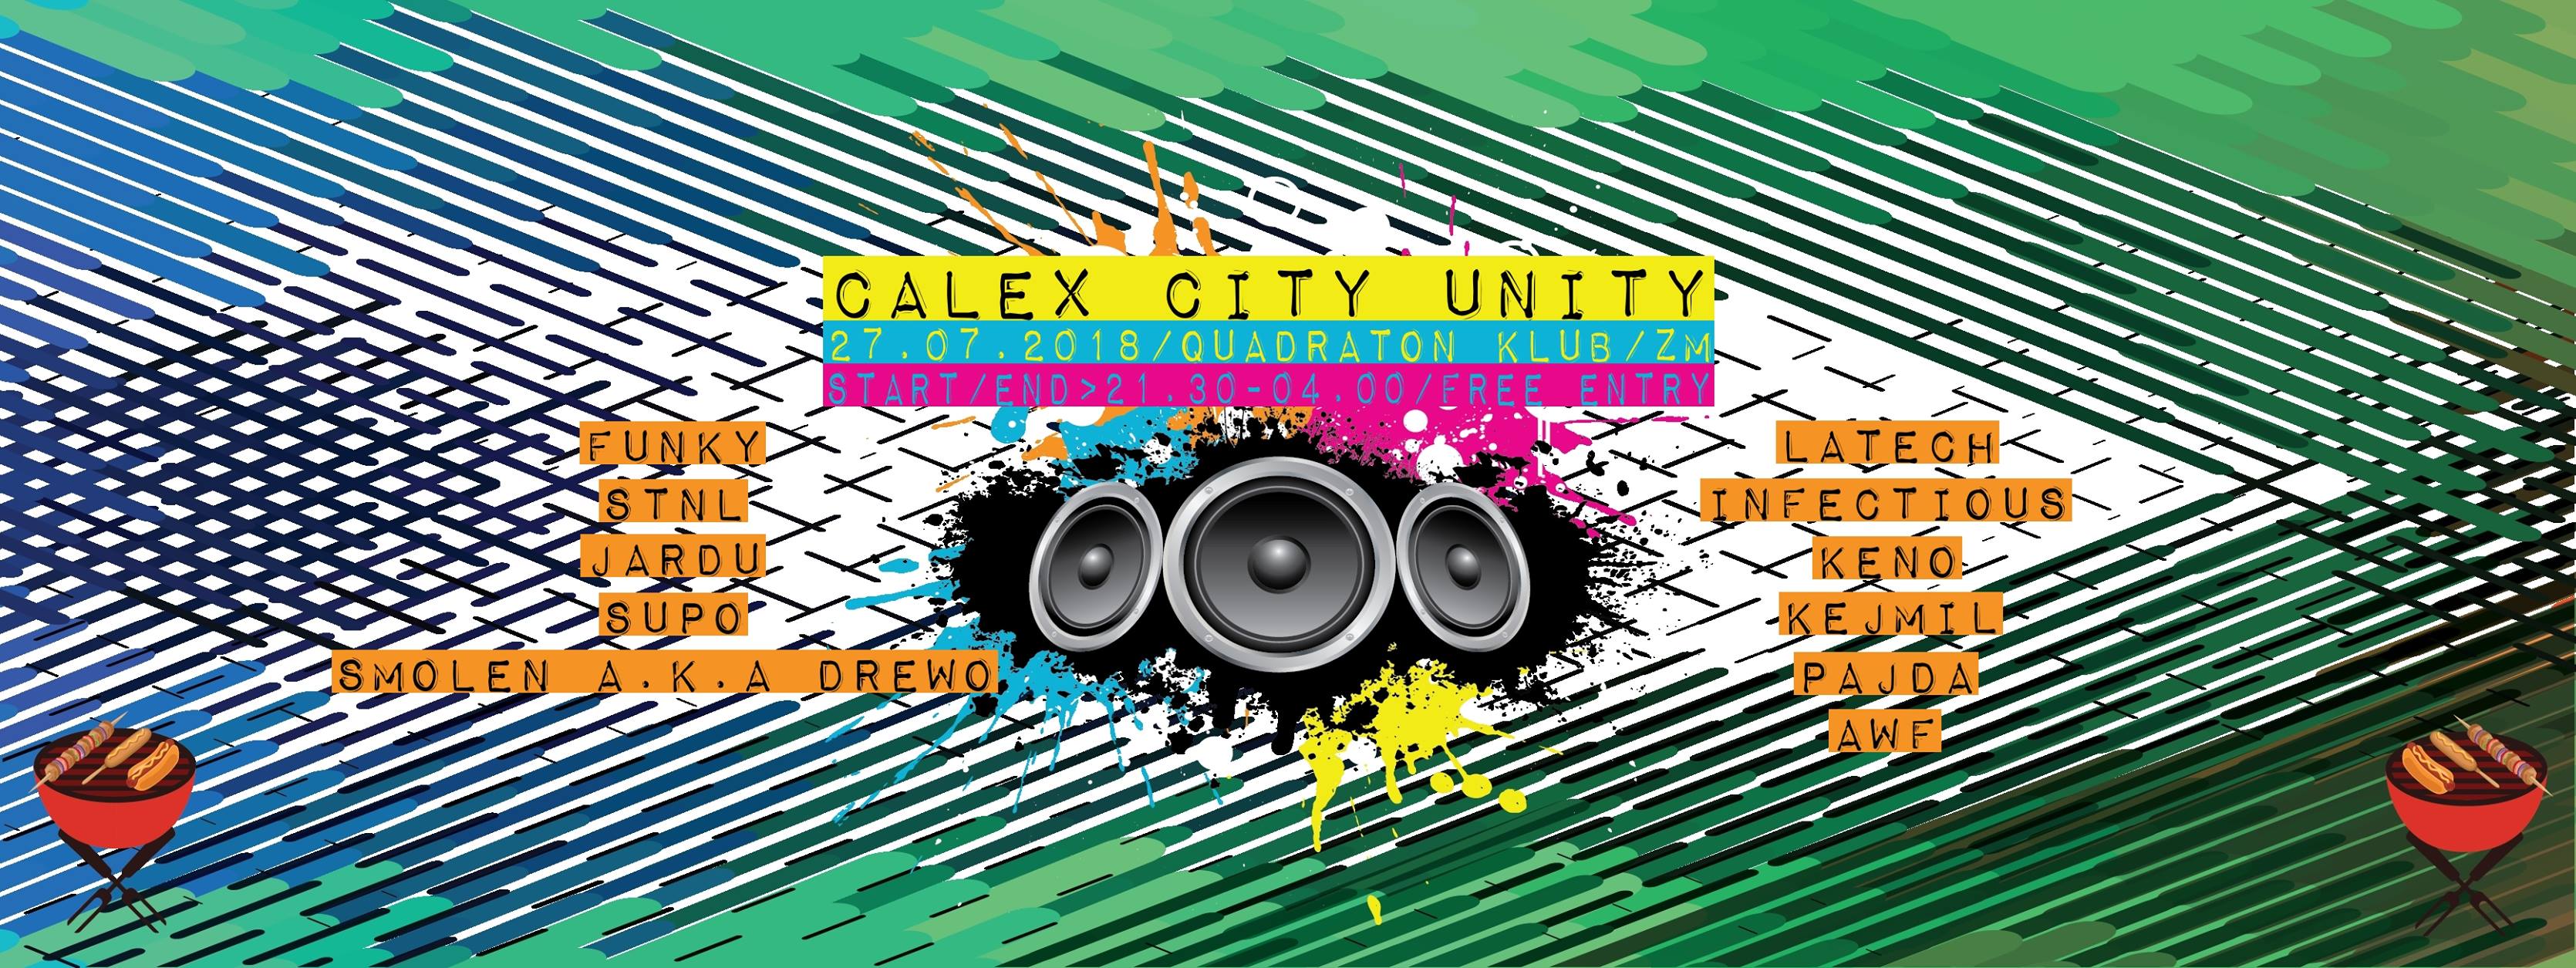 Calex City Unity